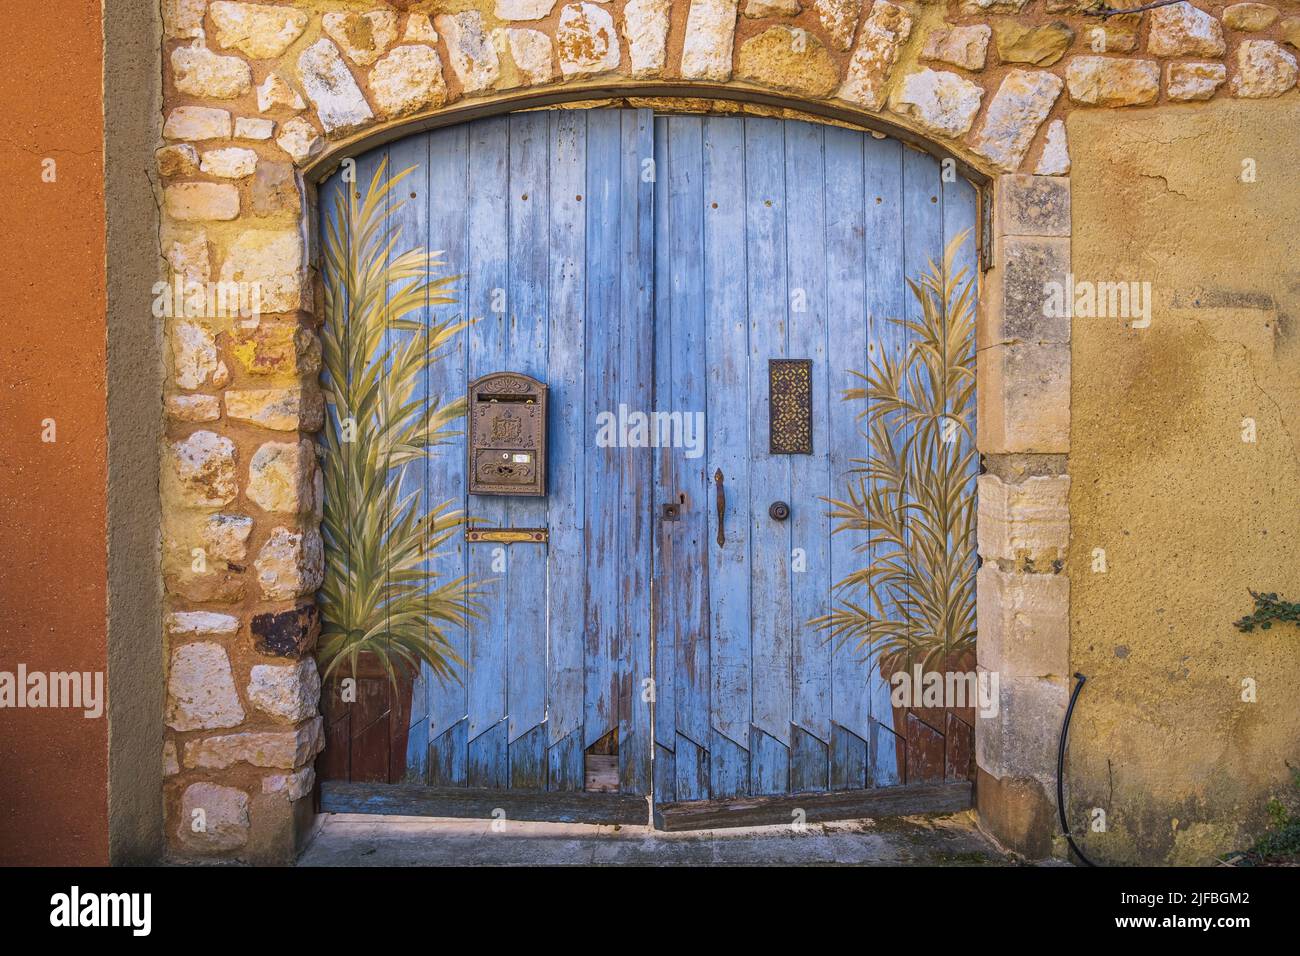 Frankreich, Vaucluse, regionaler Naturpark Luberon, Roussillon, beschriftet Les Plus Beaux Villages de France (die schönsten Dörfer Frankreichs), verzierte Tür Stockfoto